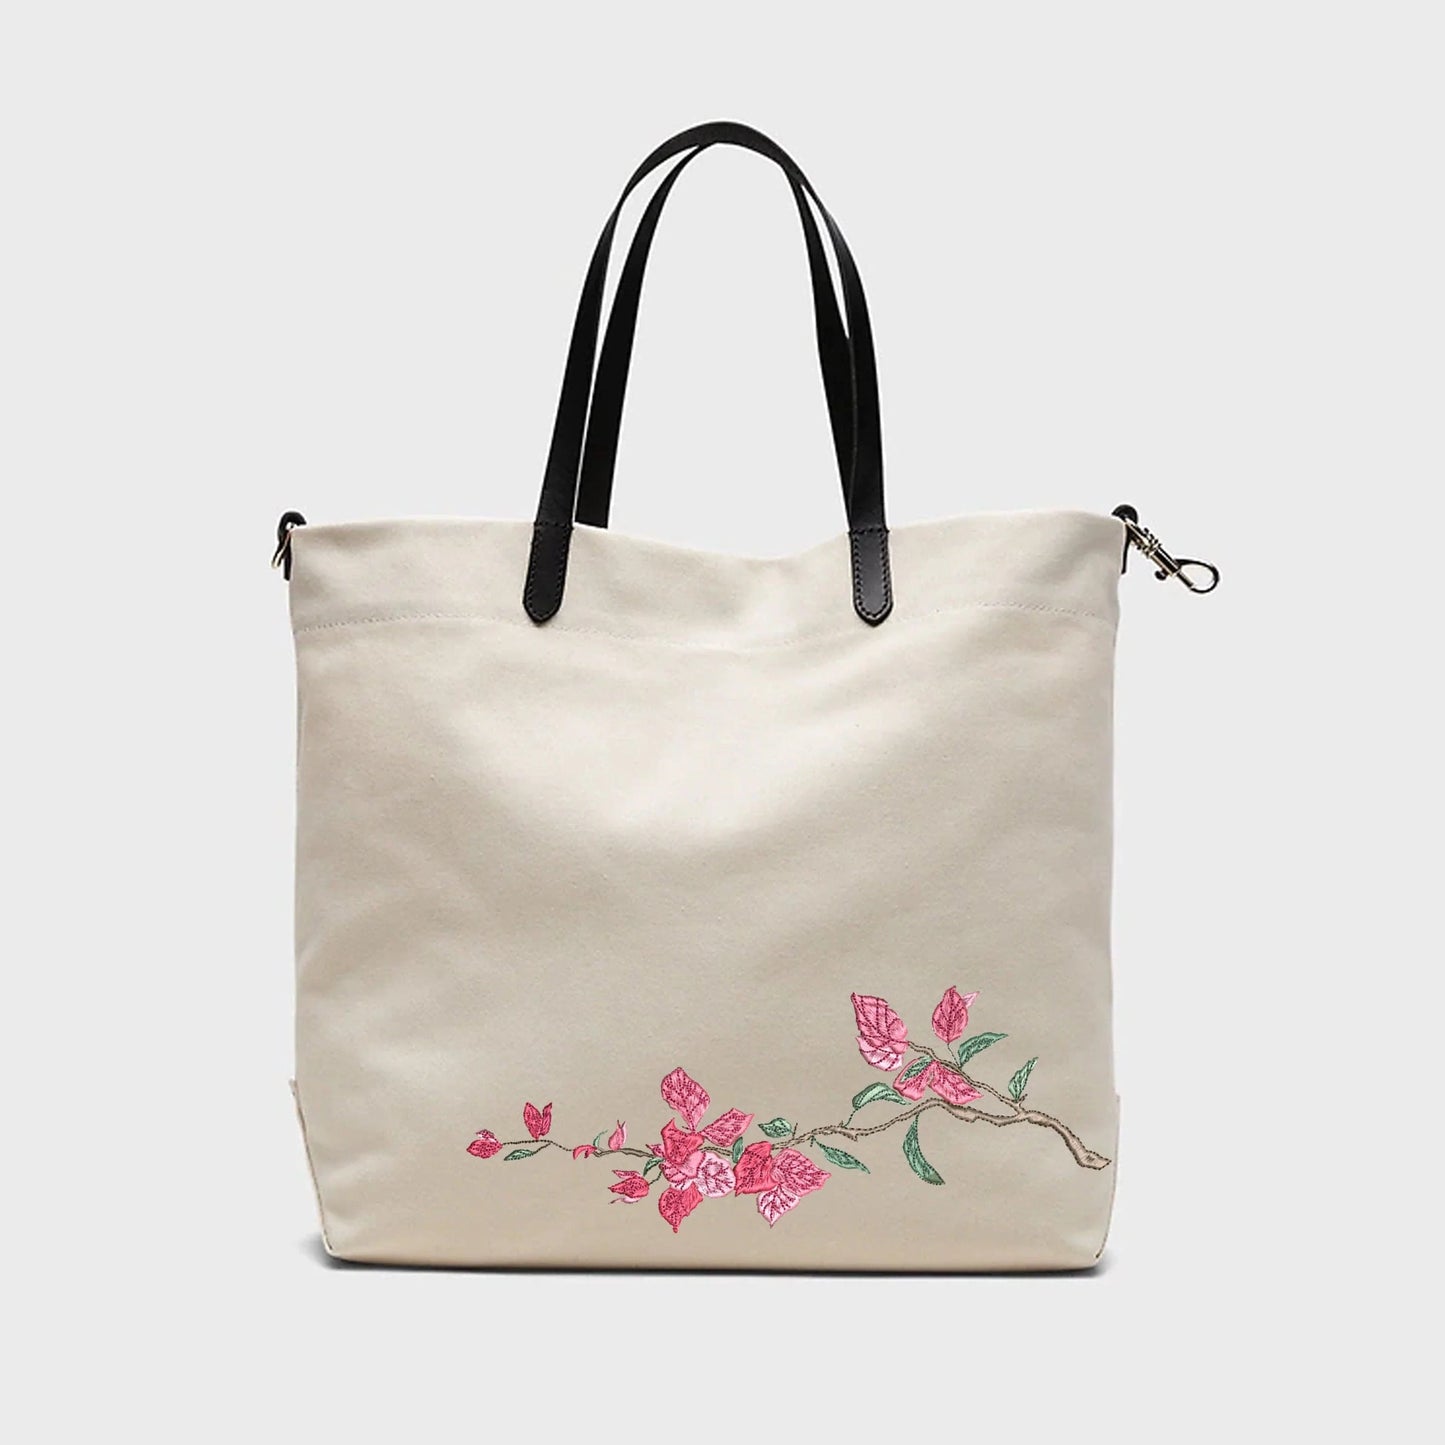 Bougainvillea Flower Machine Embroidery Design on linen handbag